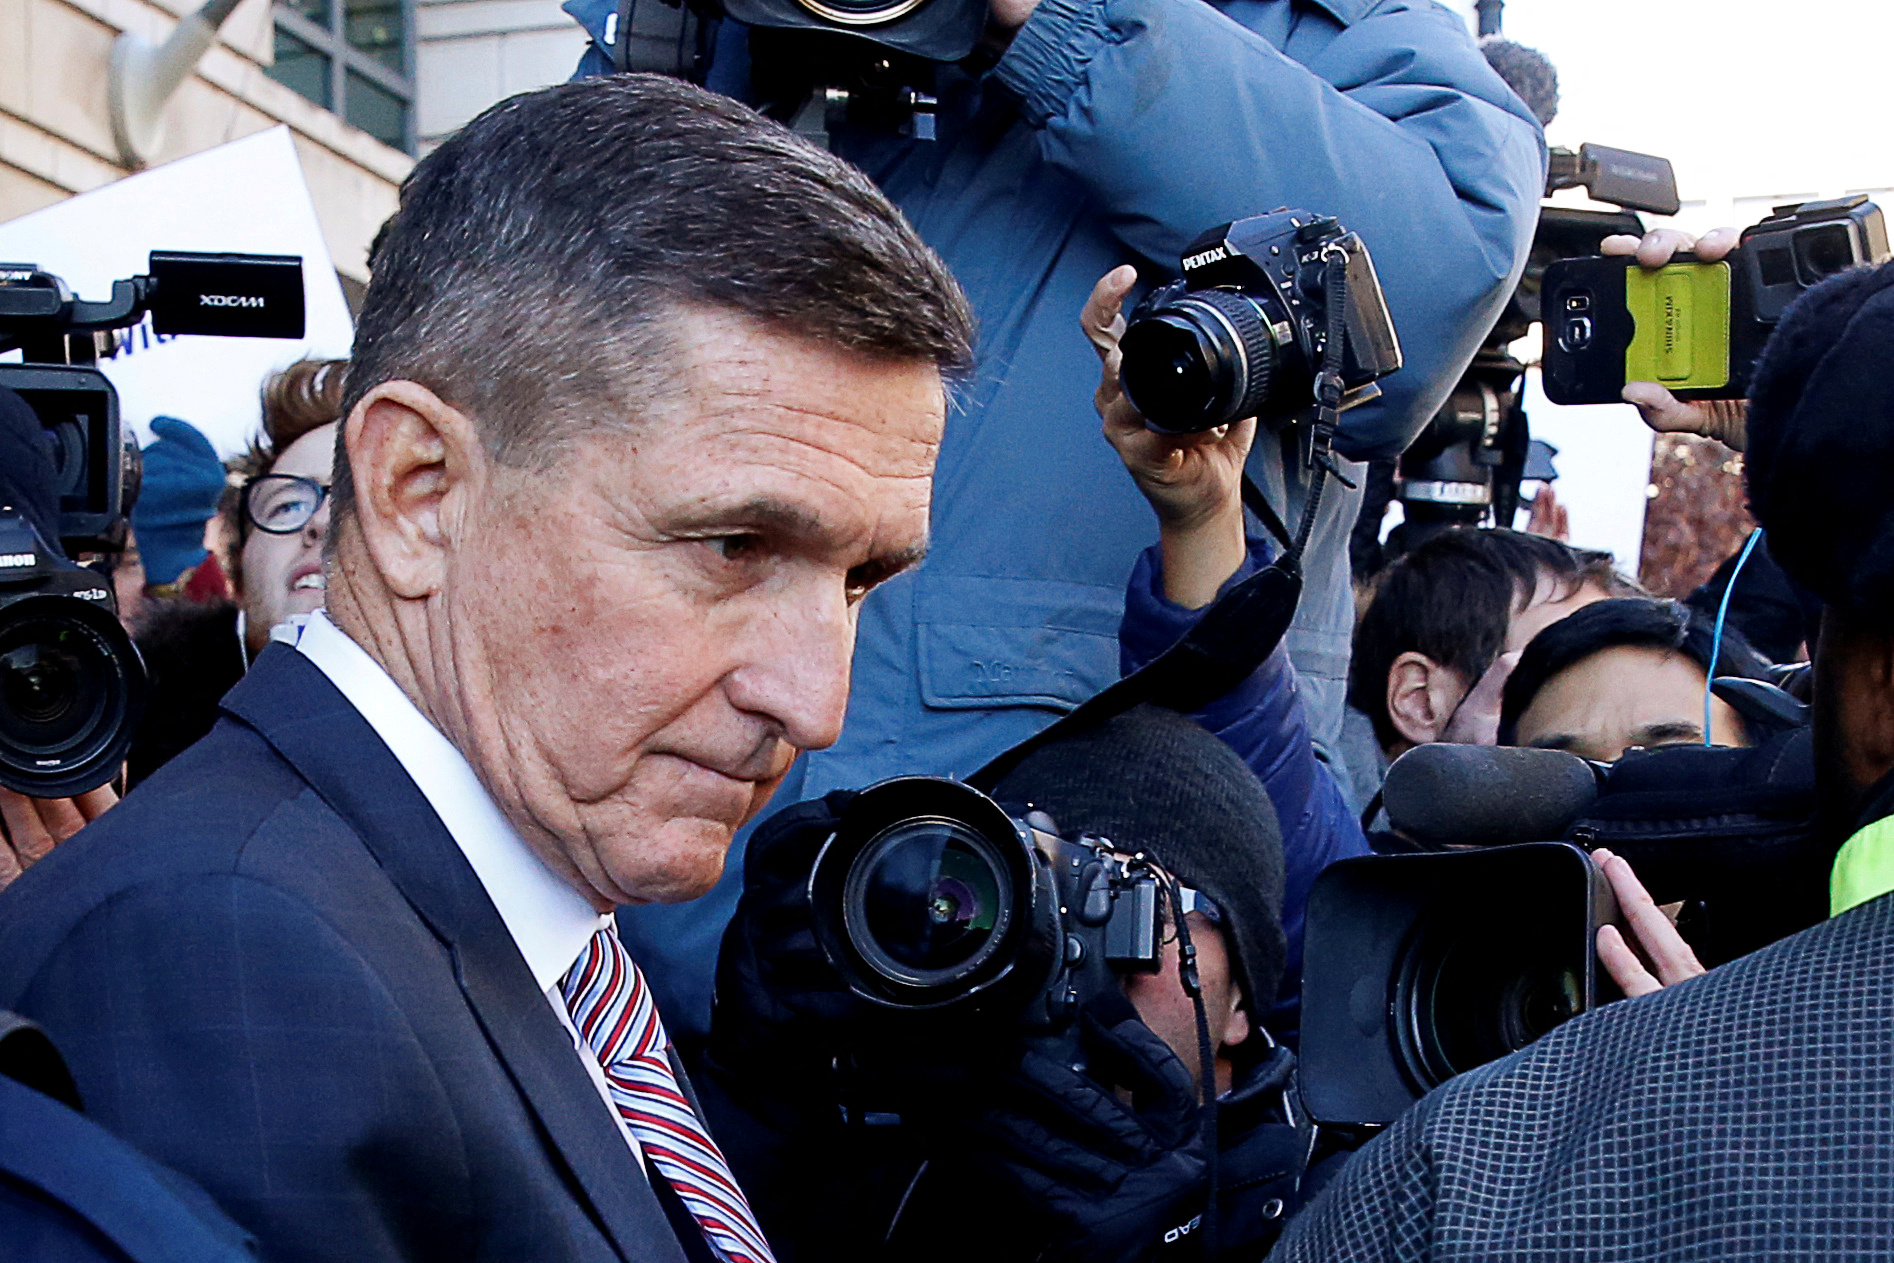 Former U.S. national security adviser Flynn departs after sentencing hearing at U.S. District Court in Washington